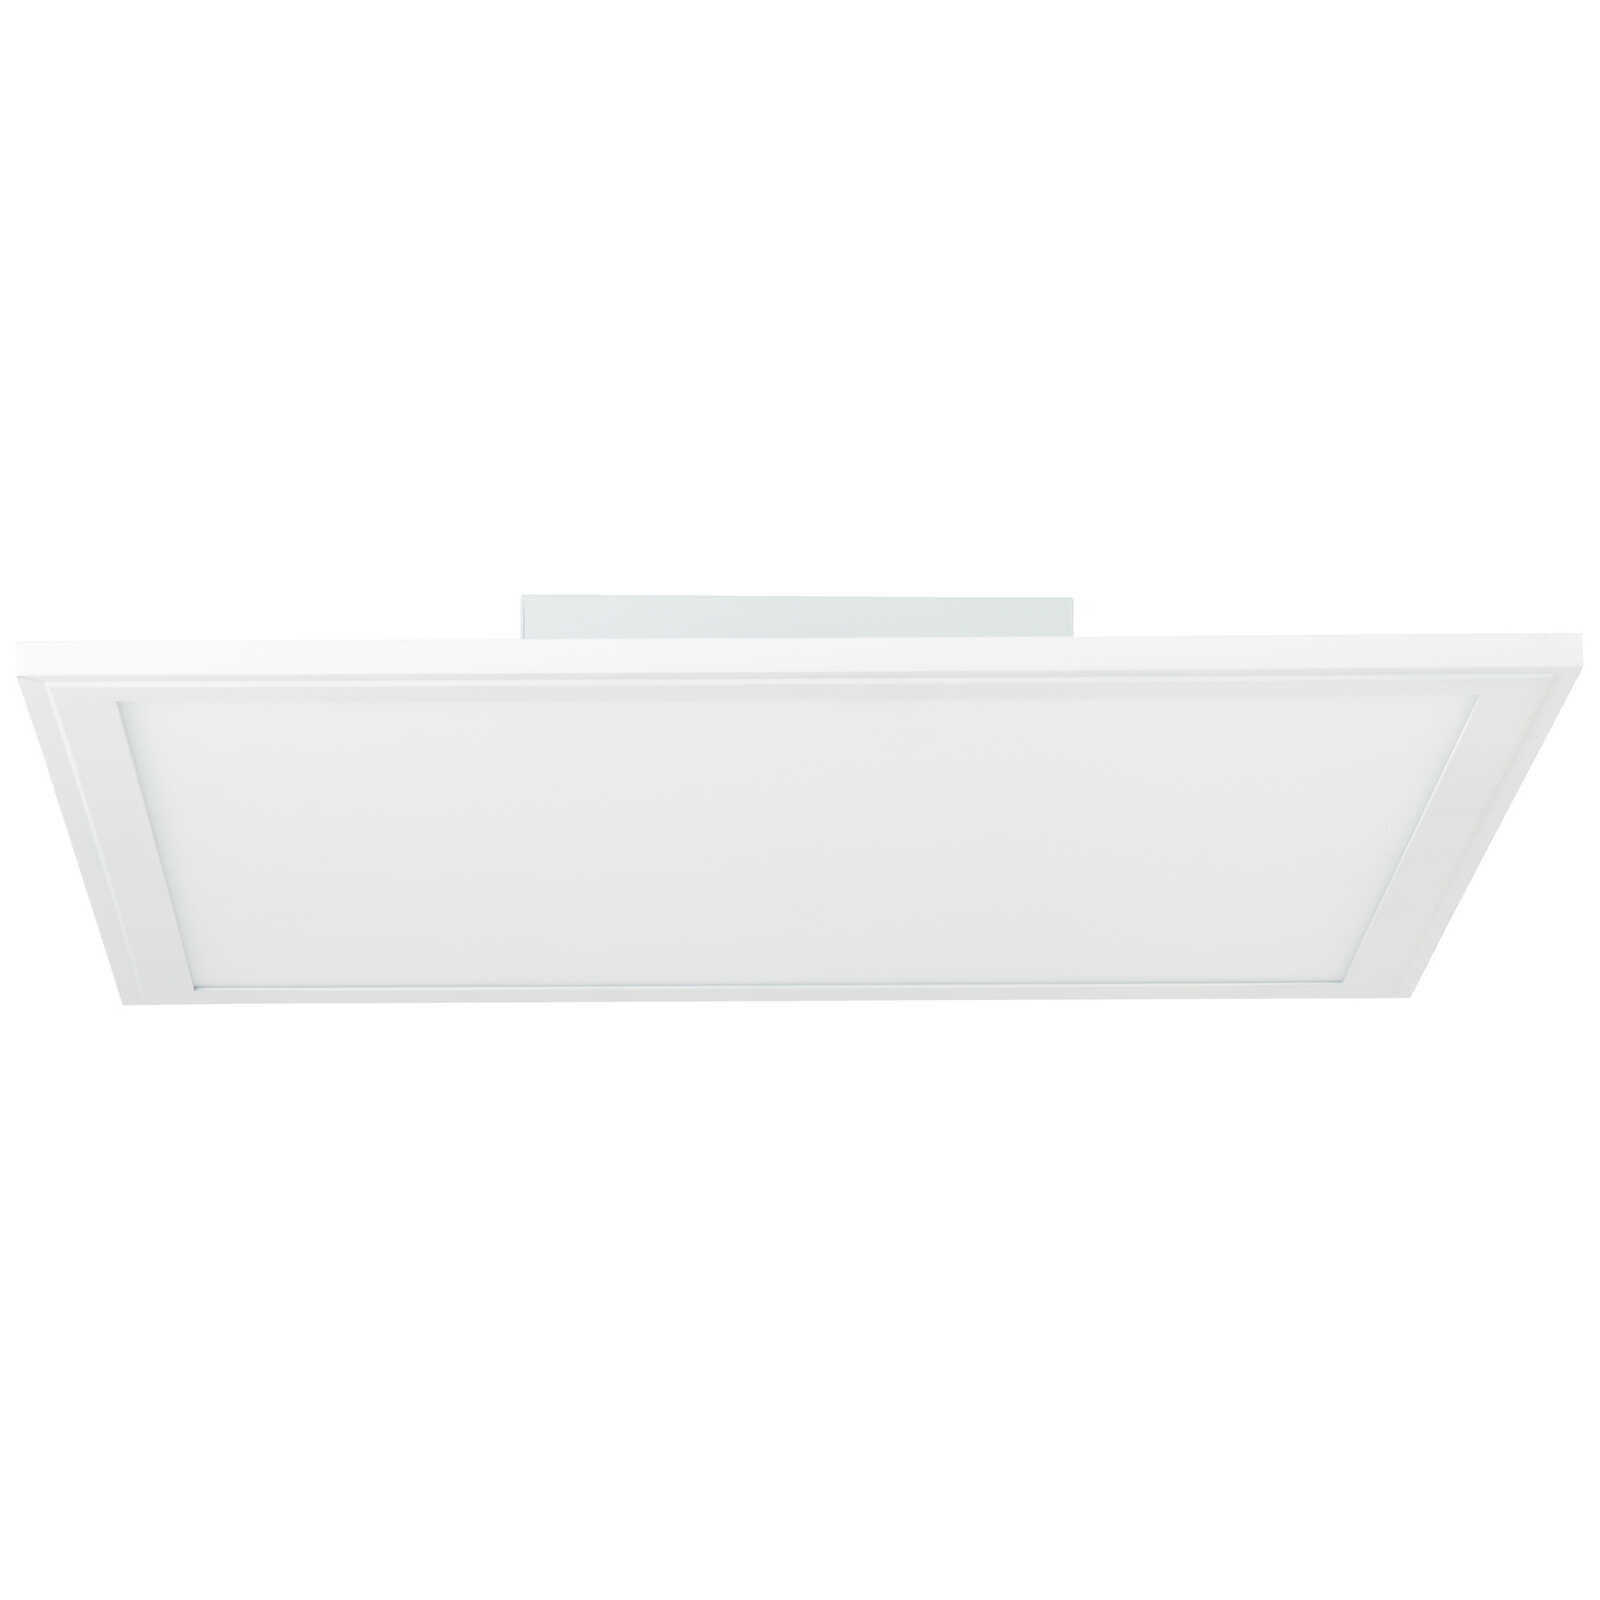             Plastic ceiling light - Aaron 1 - White
        